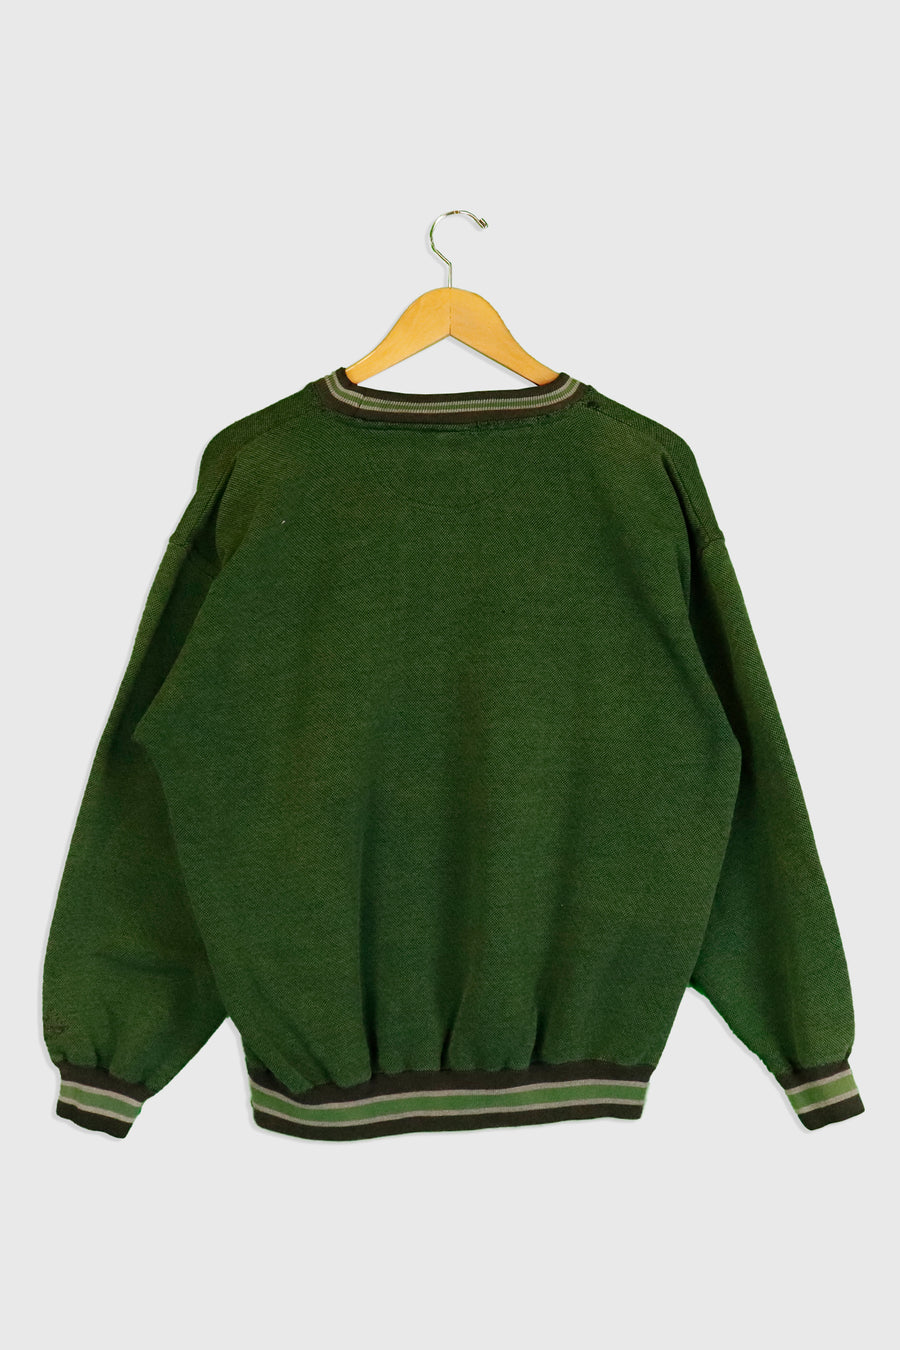 Vintage Green Bay Packers Embroidered Logo Crewneck Sweatshirt Sz S